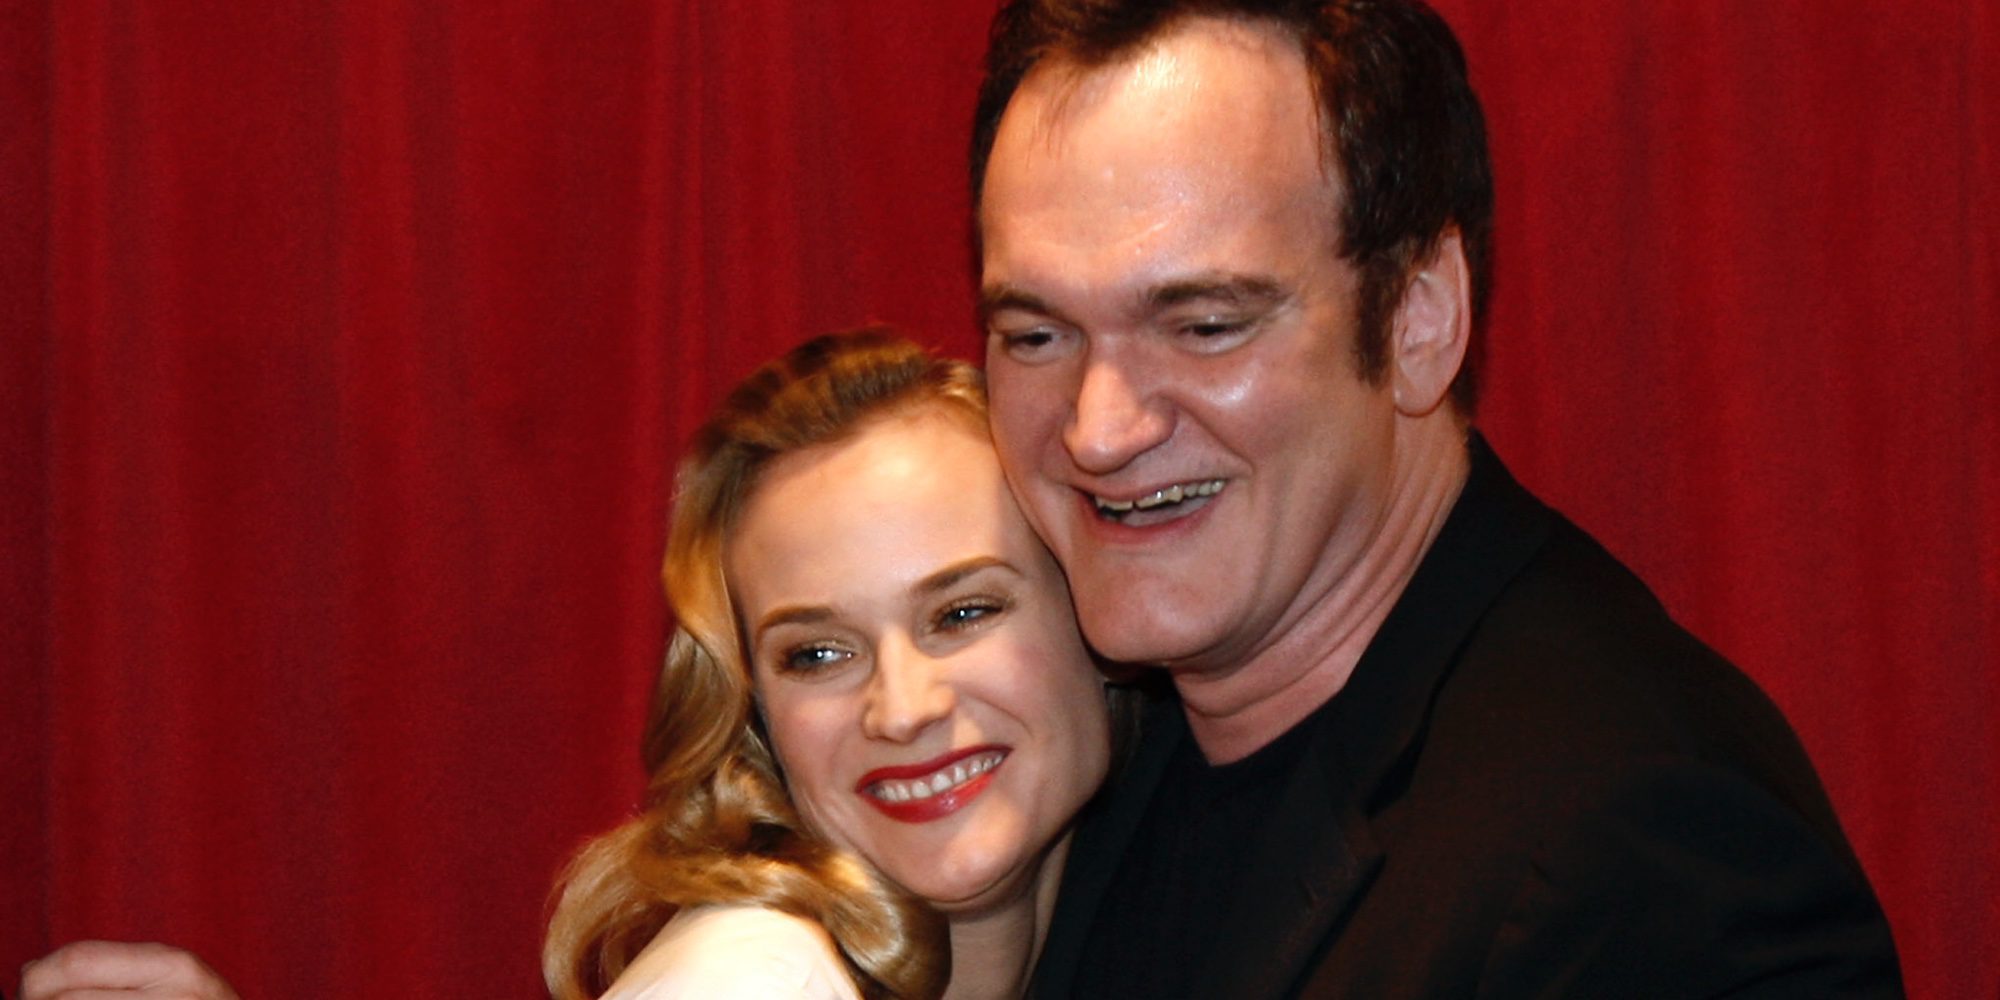 Diane Kruger defiende a Quentin Tarantino tras las acusaciones de Uma Thurman